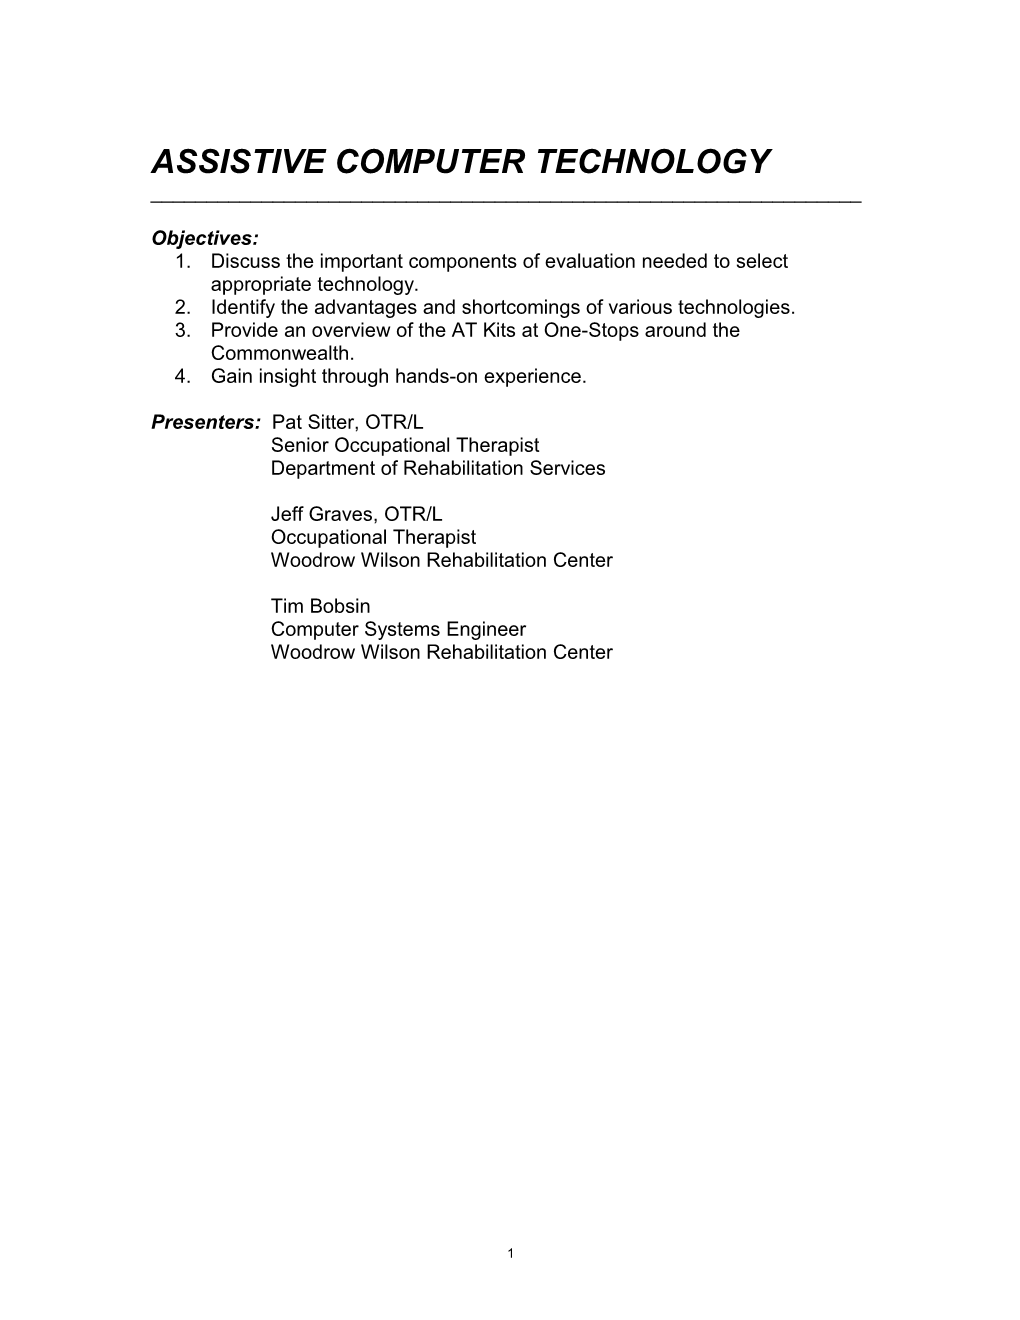 03 - Assistive Computer Technology